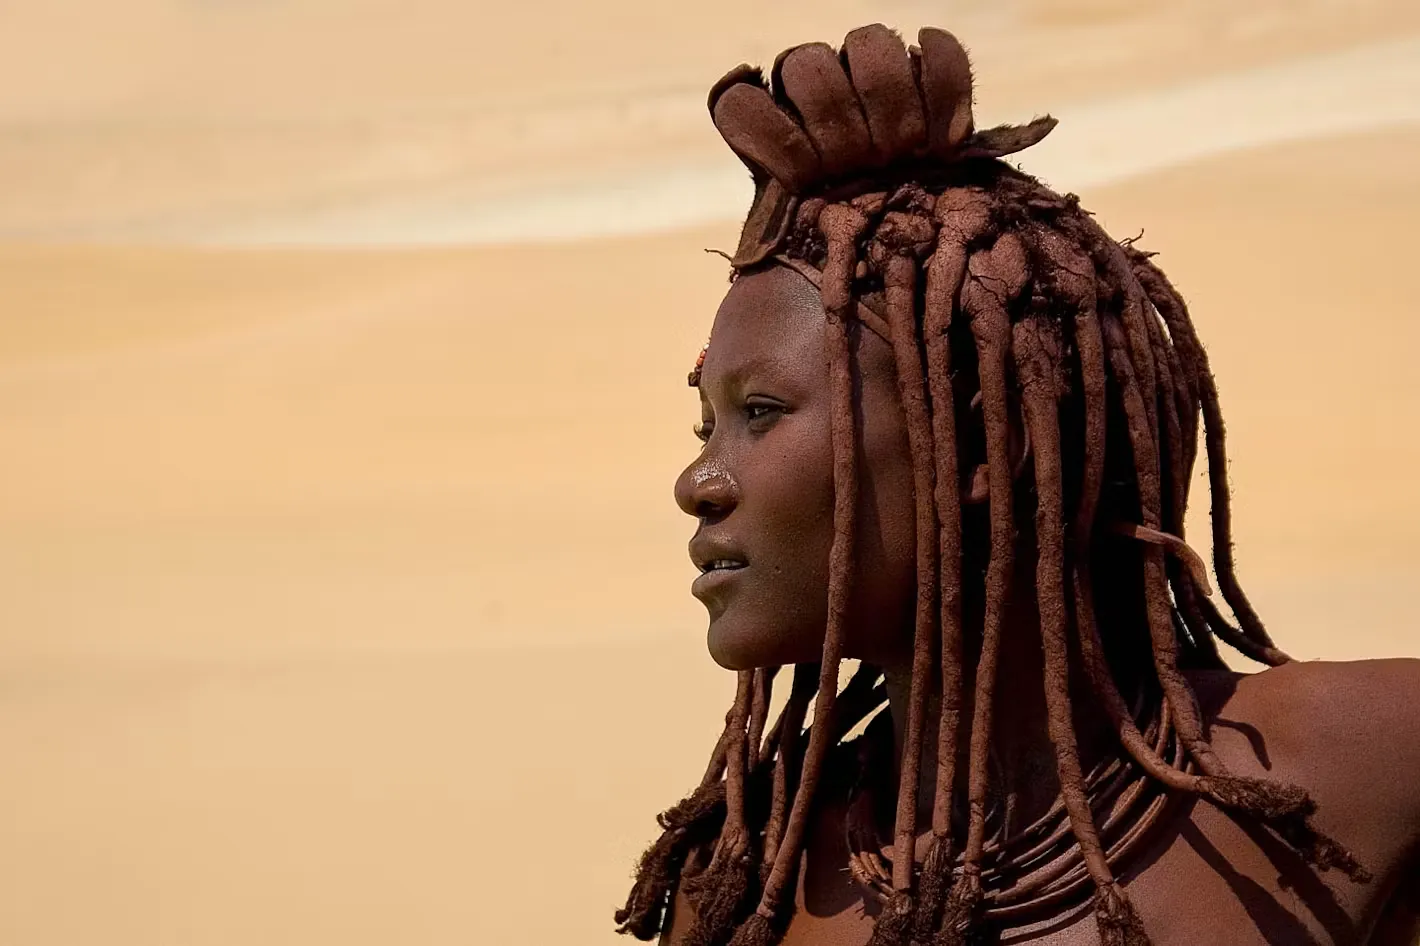 Meeting the Himba Community